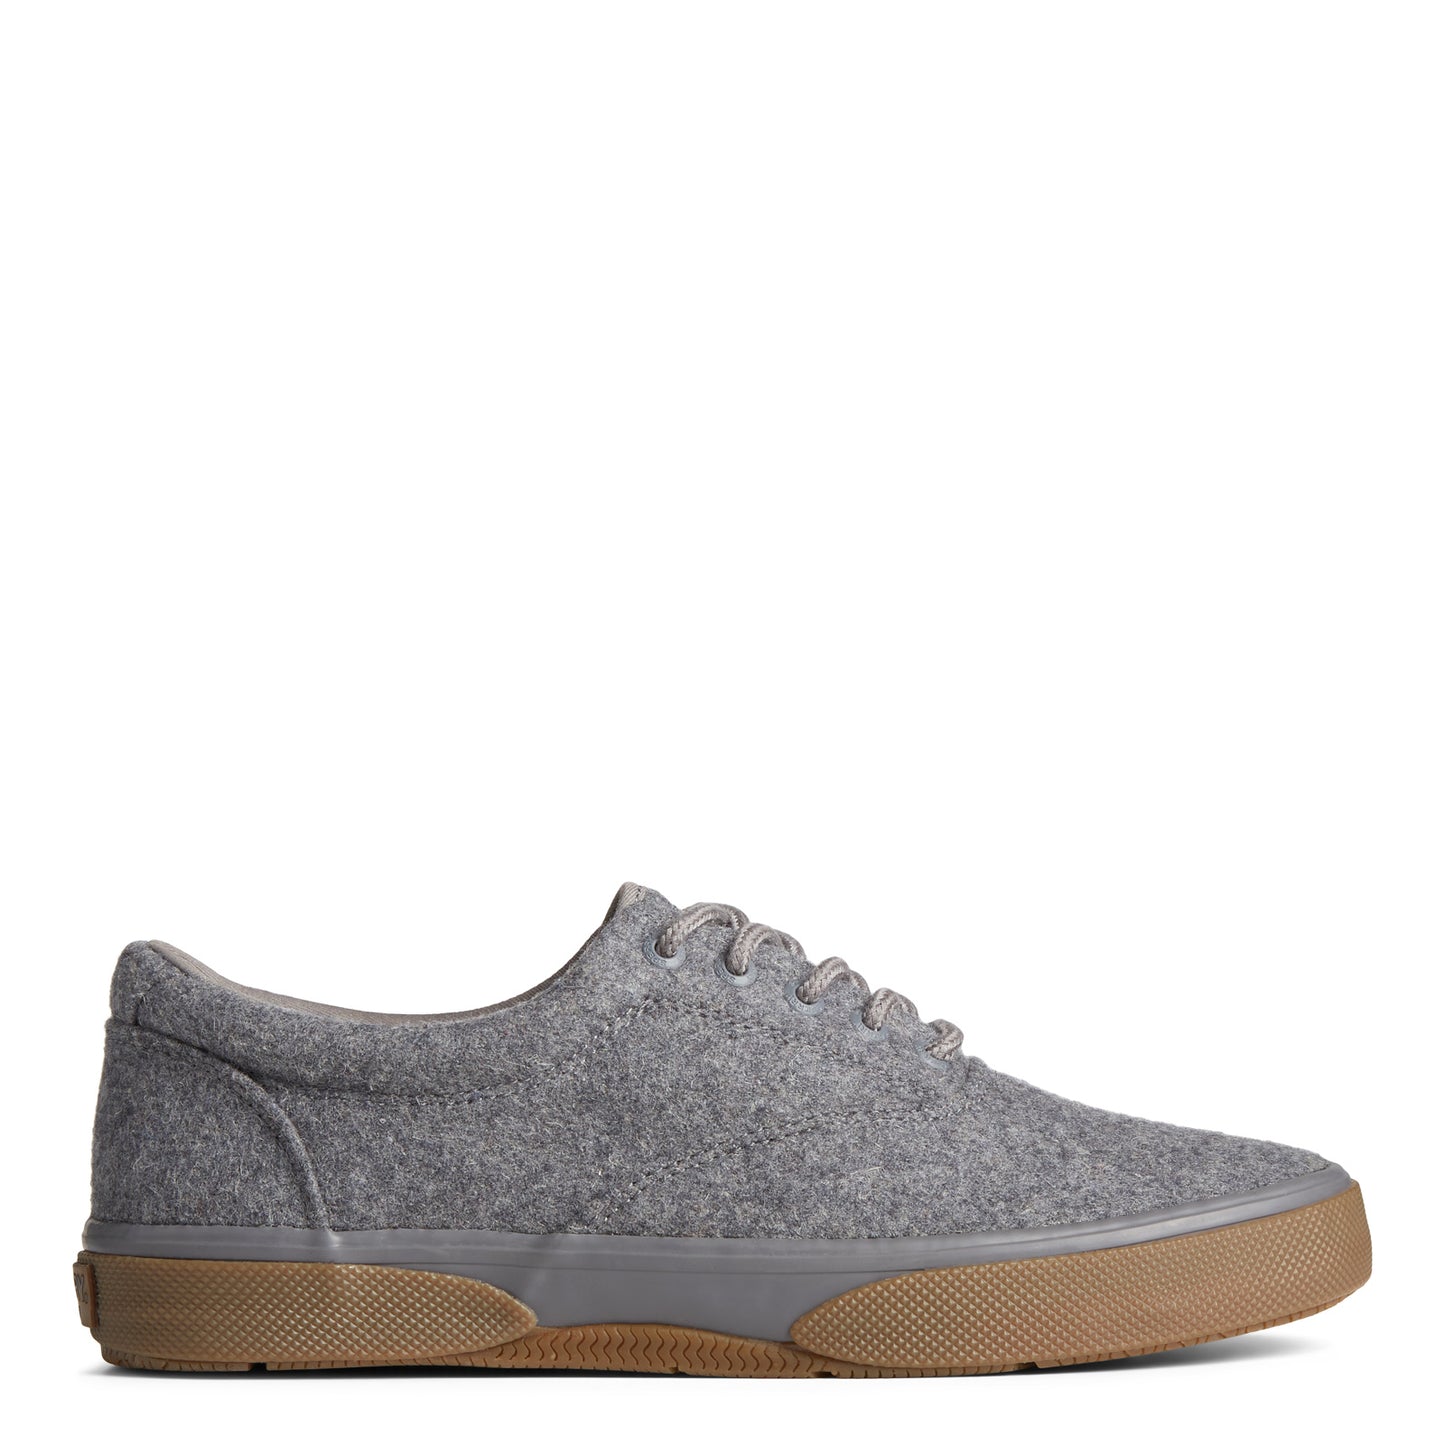 Peltz Shoes  Men's Sperry Halyard CVO Wool Sneaker Grey STS25388